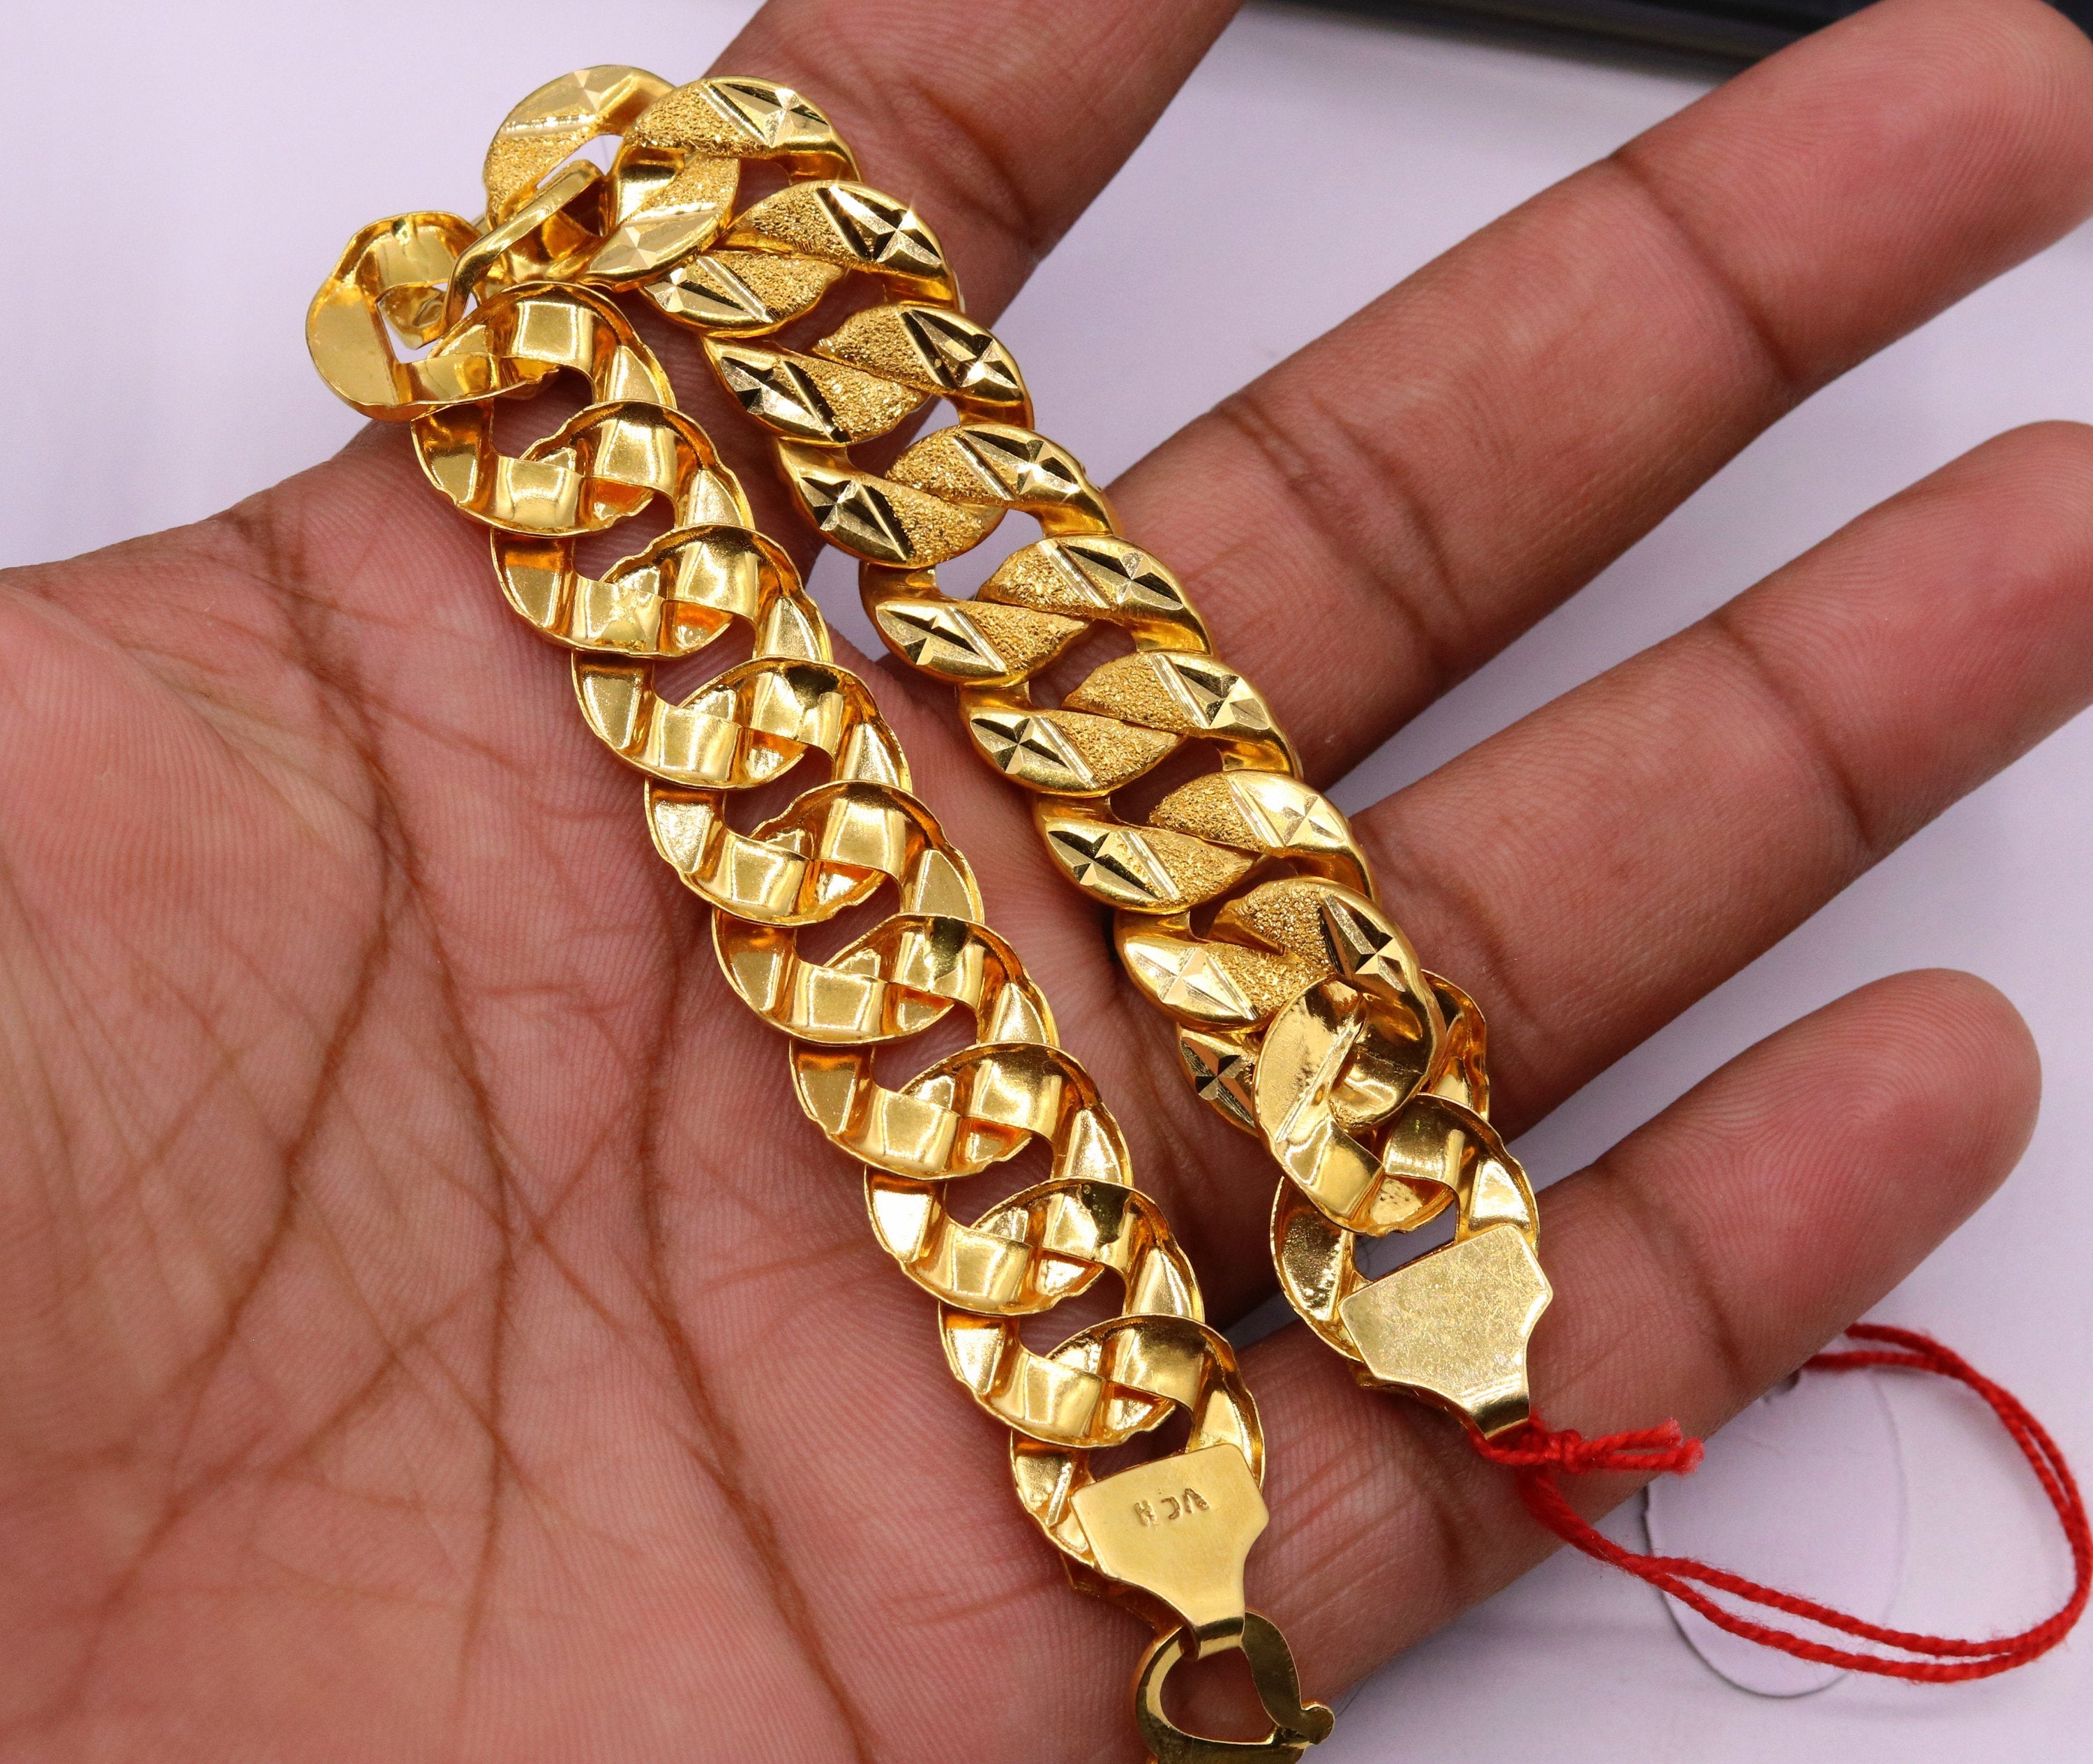 Buy Memoir Gold plated flat chain simple sober, Stylish fashion bracelet  Women Girls Latest at Amazon.in